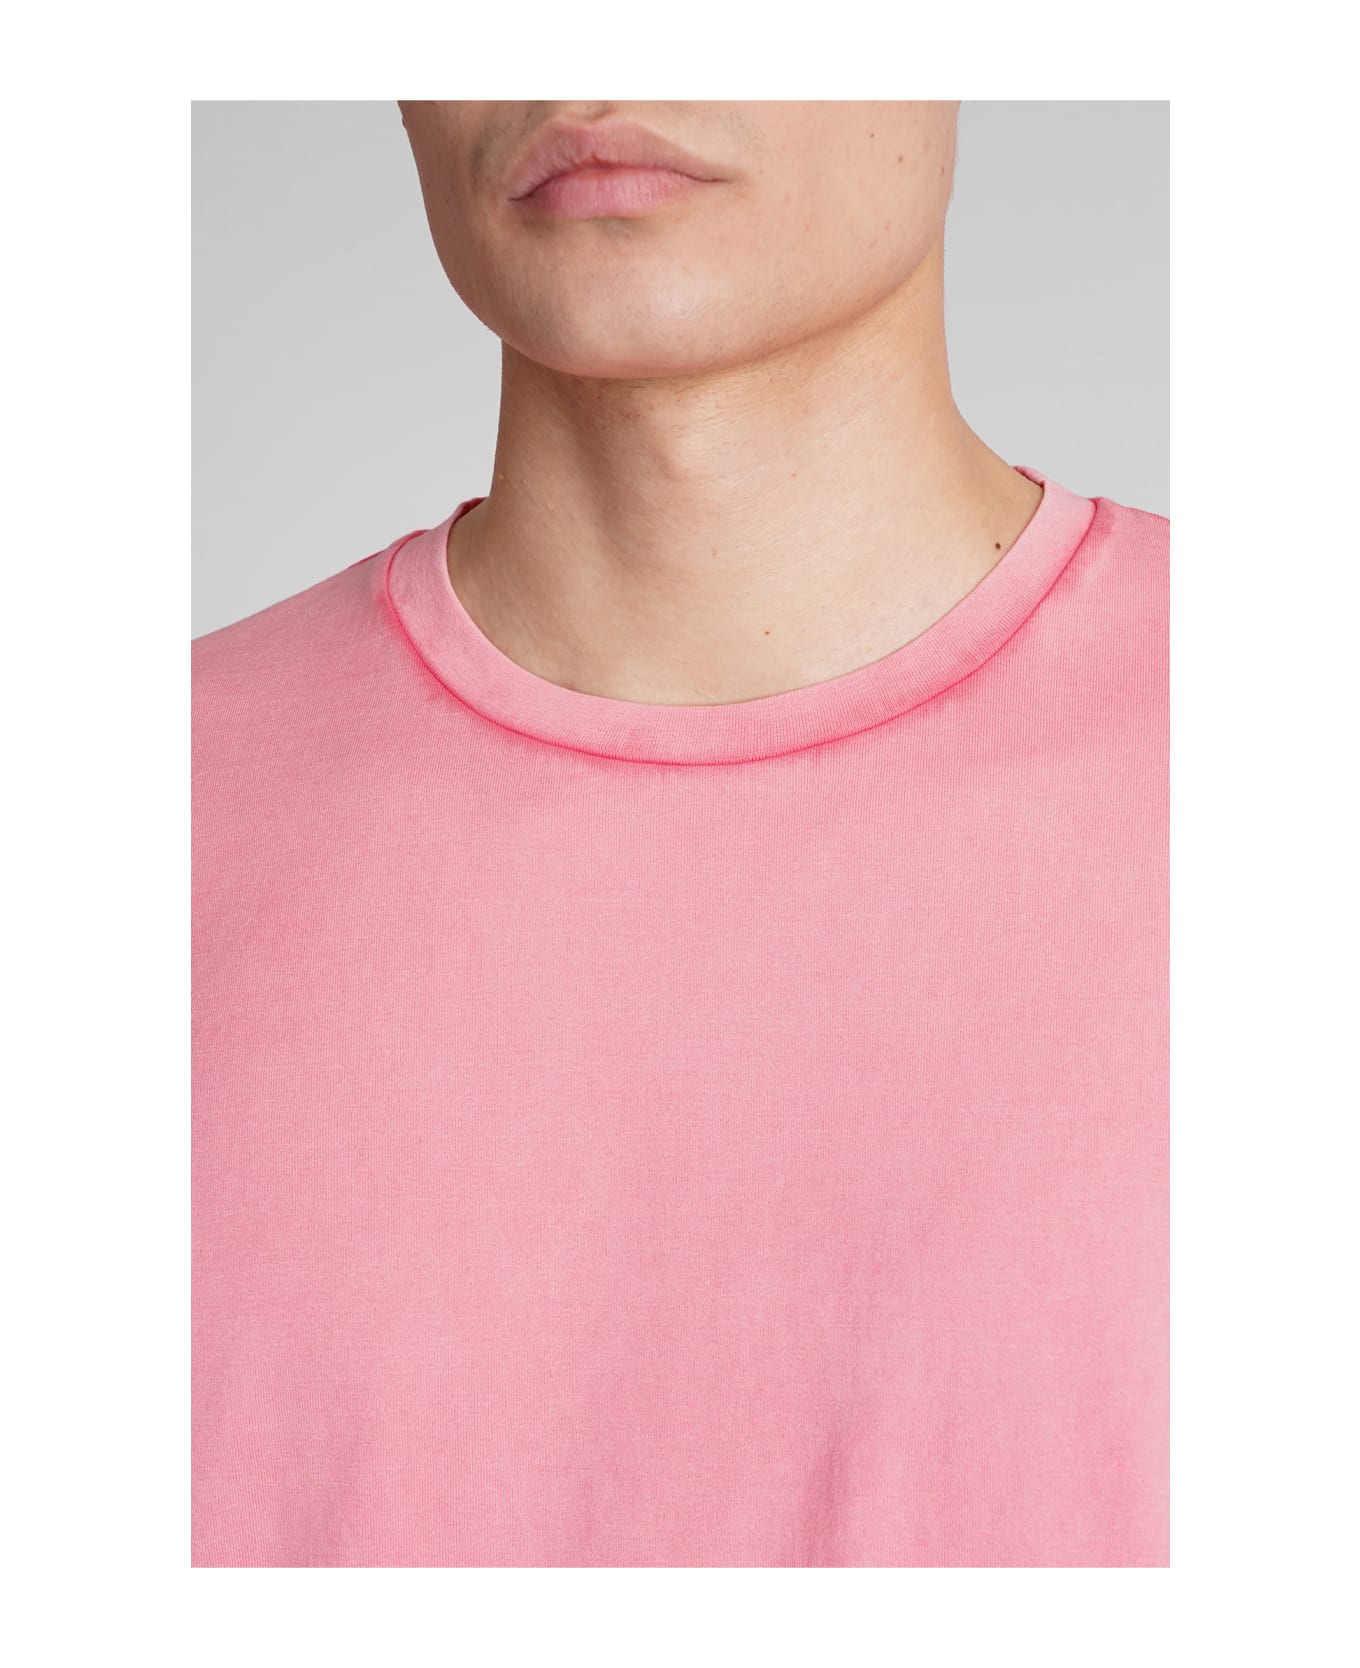 Roberto Collina T-shirt In Rose-pink Cotton - rose-pink シャツ